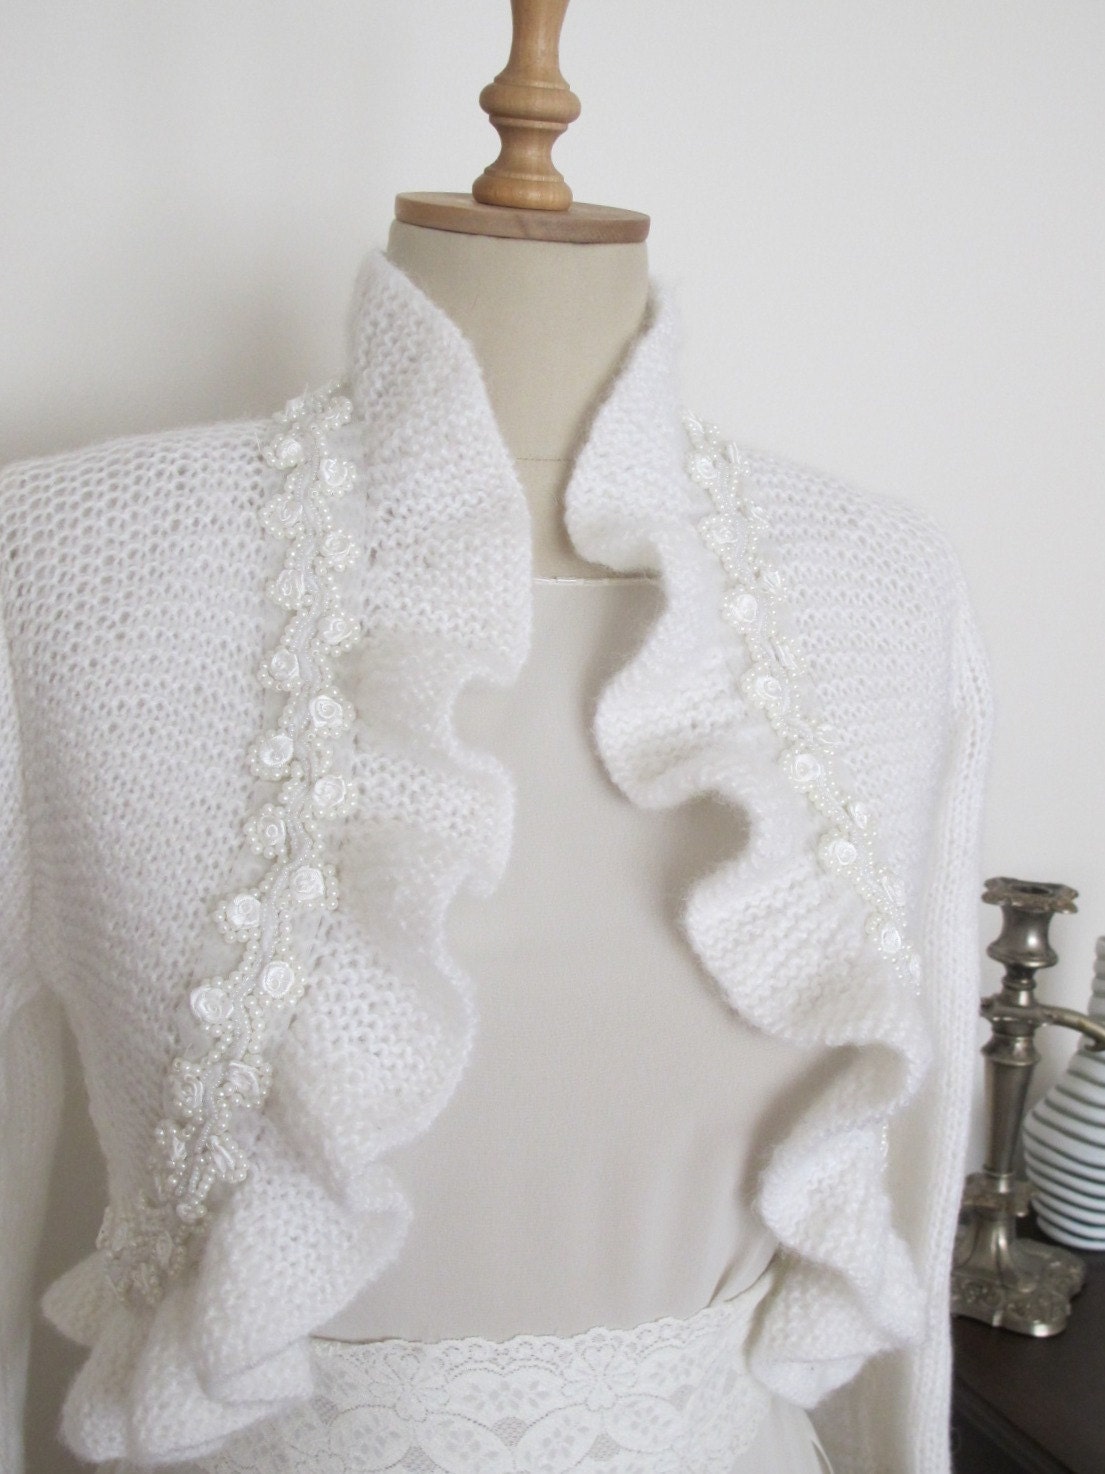 Crochet Patterns: Shrugs And Boler
o&apos;s - Free Crochet Patterns